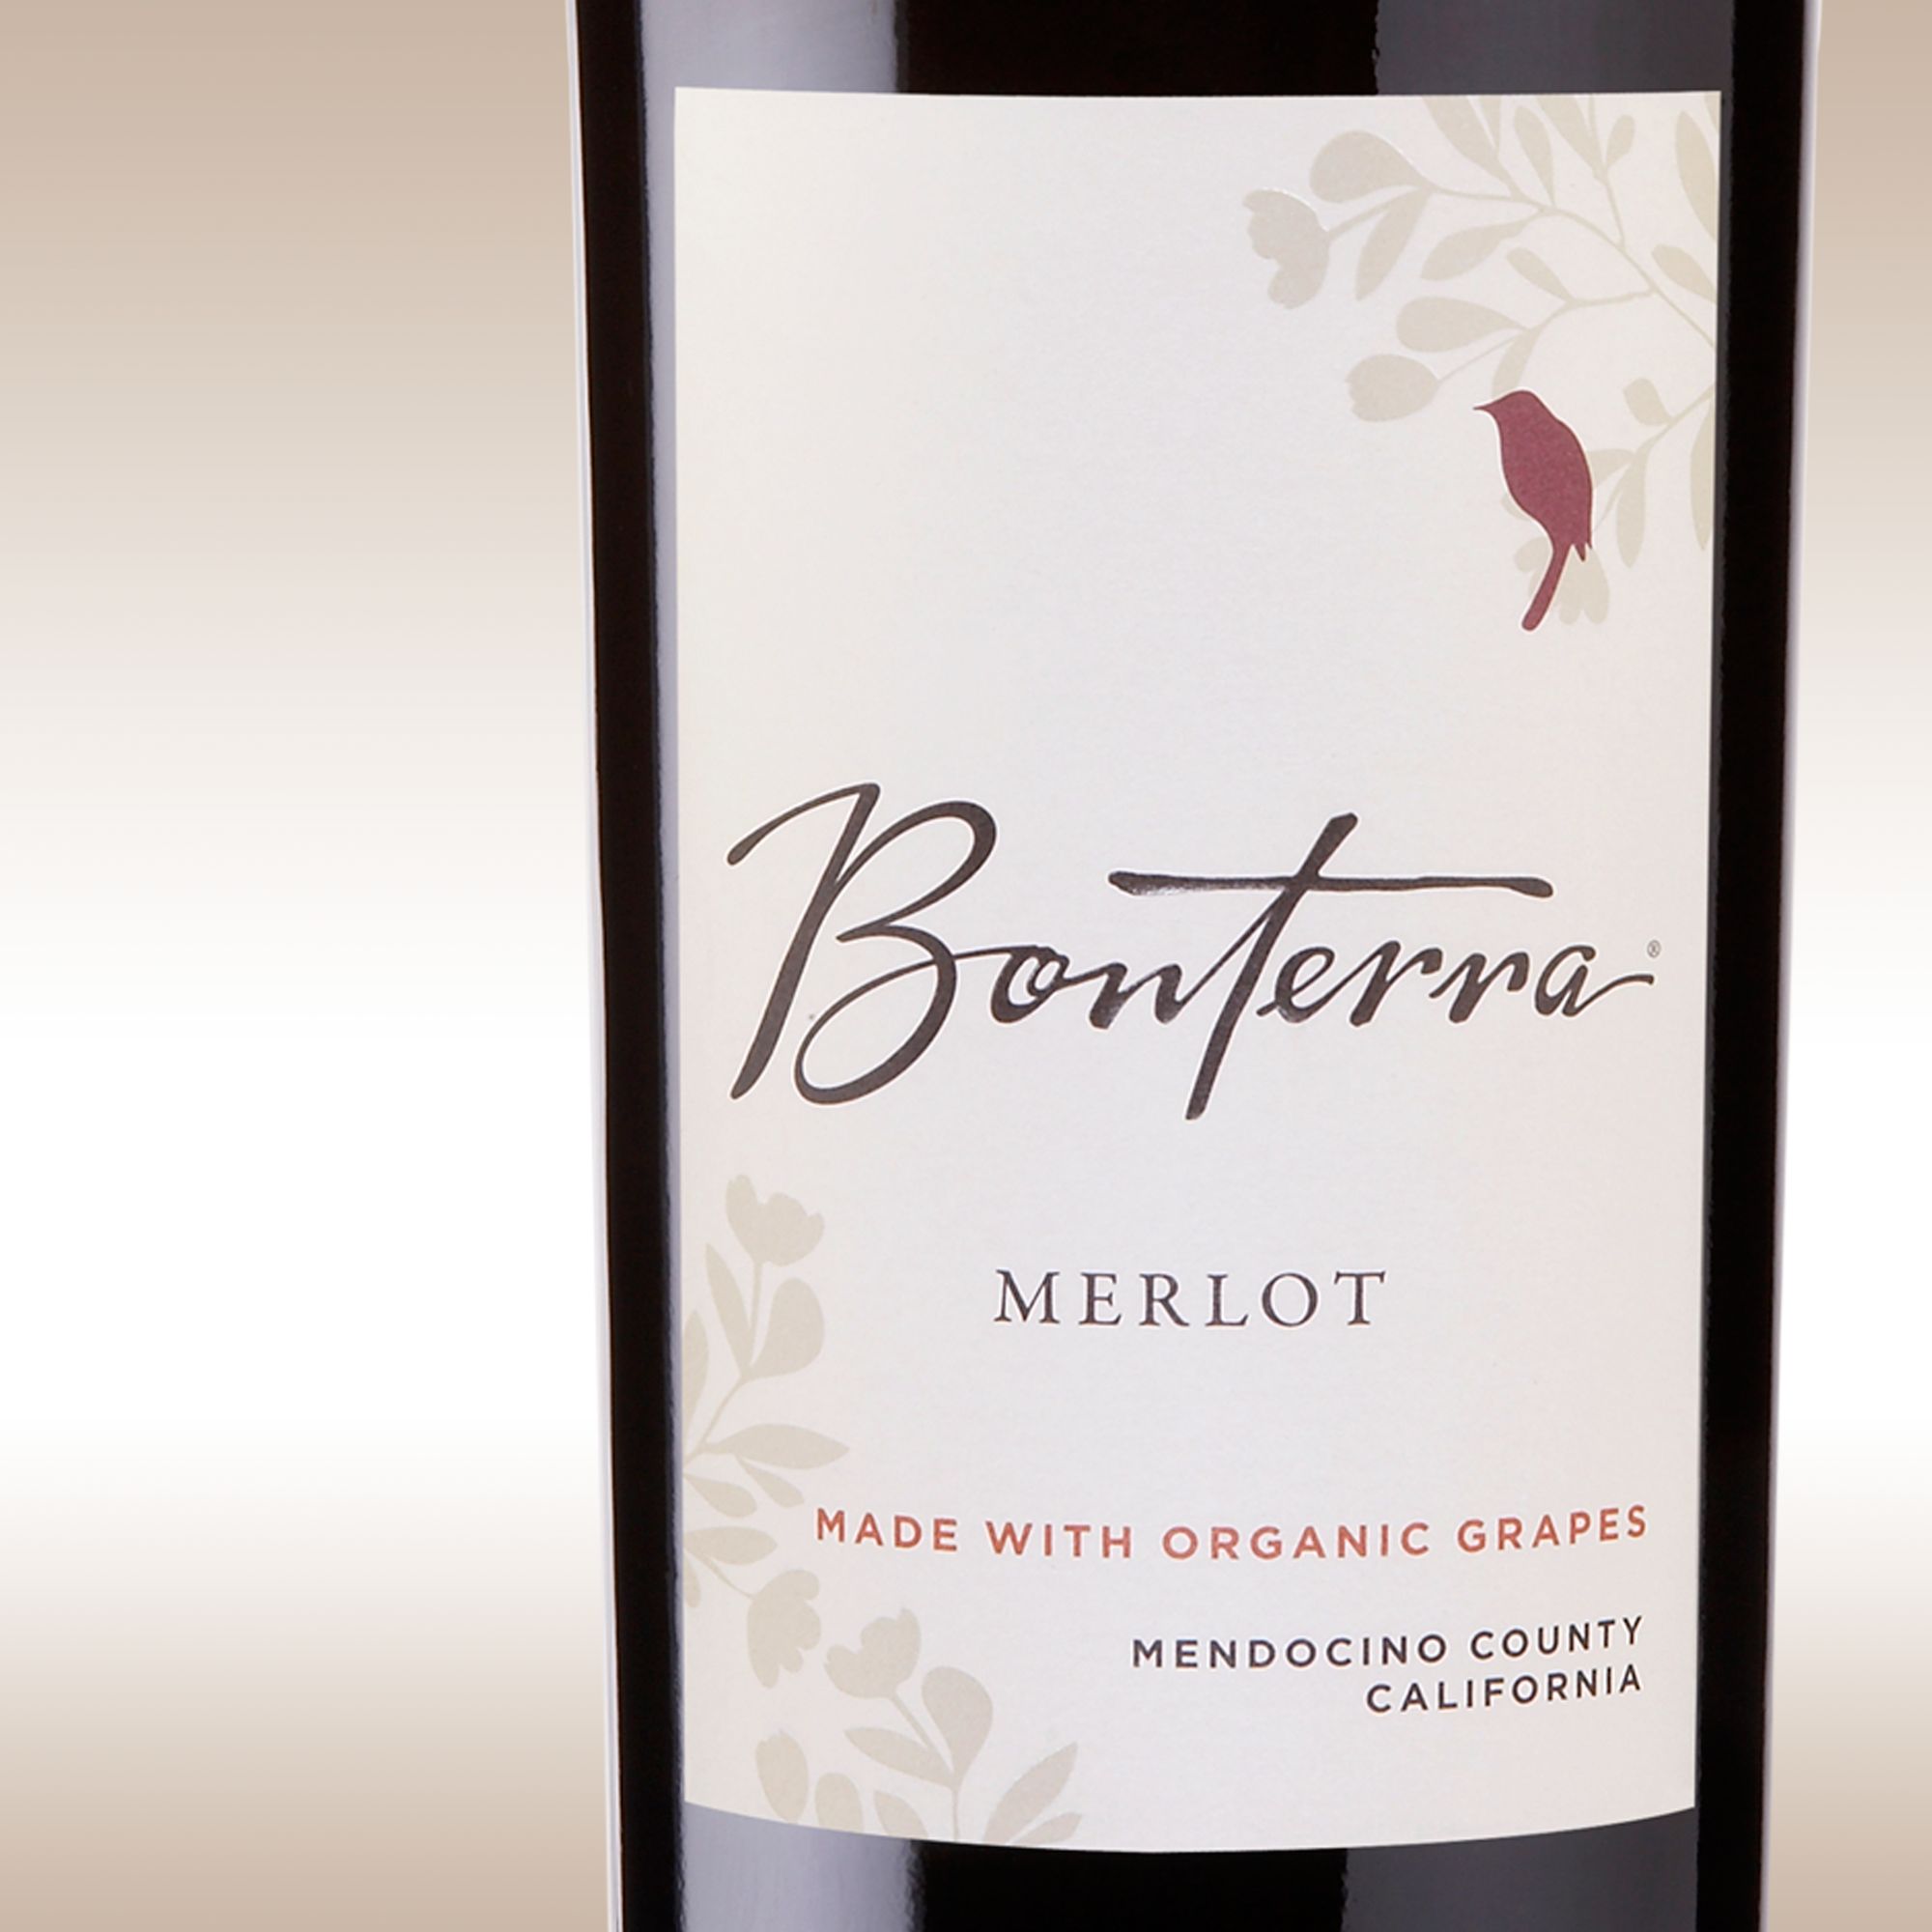 Unbranded Bonterra Merlot 2005/06 Mendocino County, California, USA